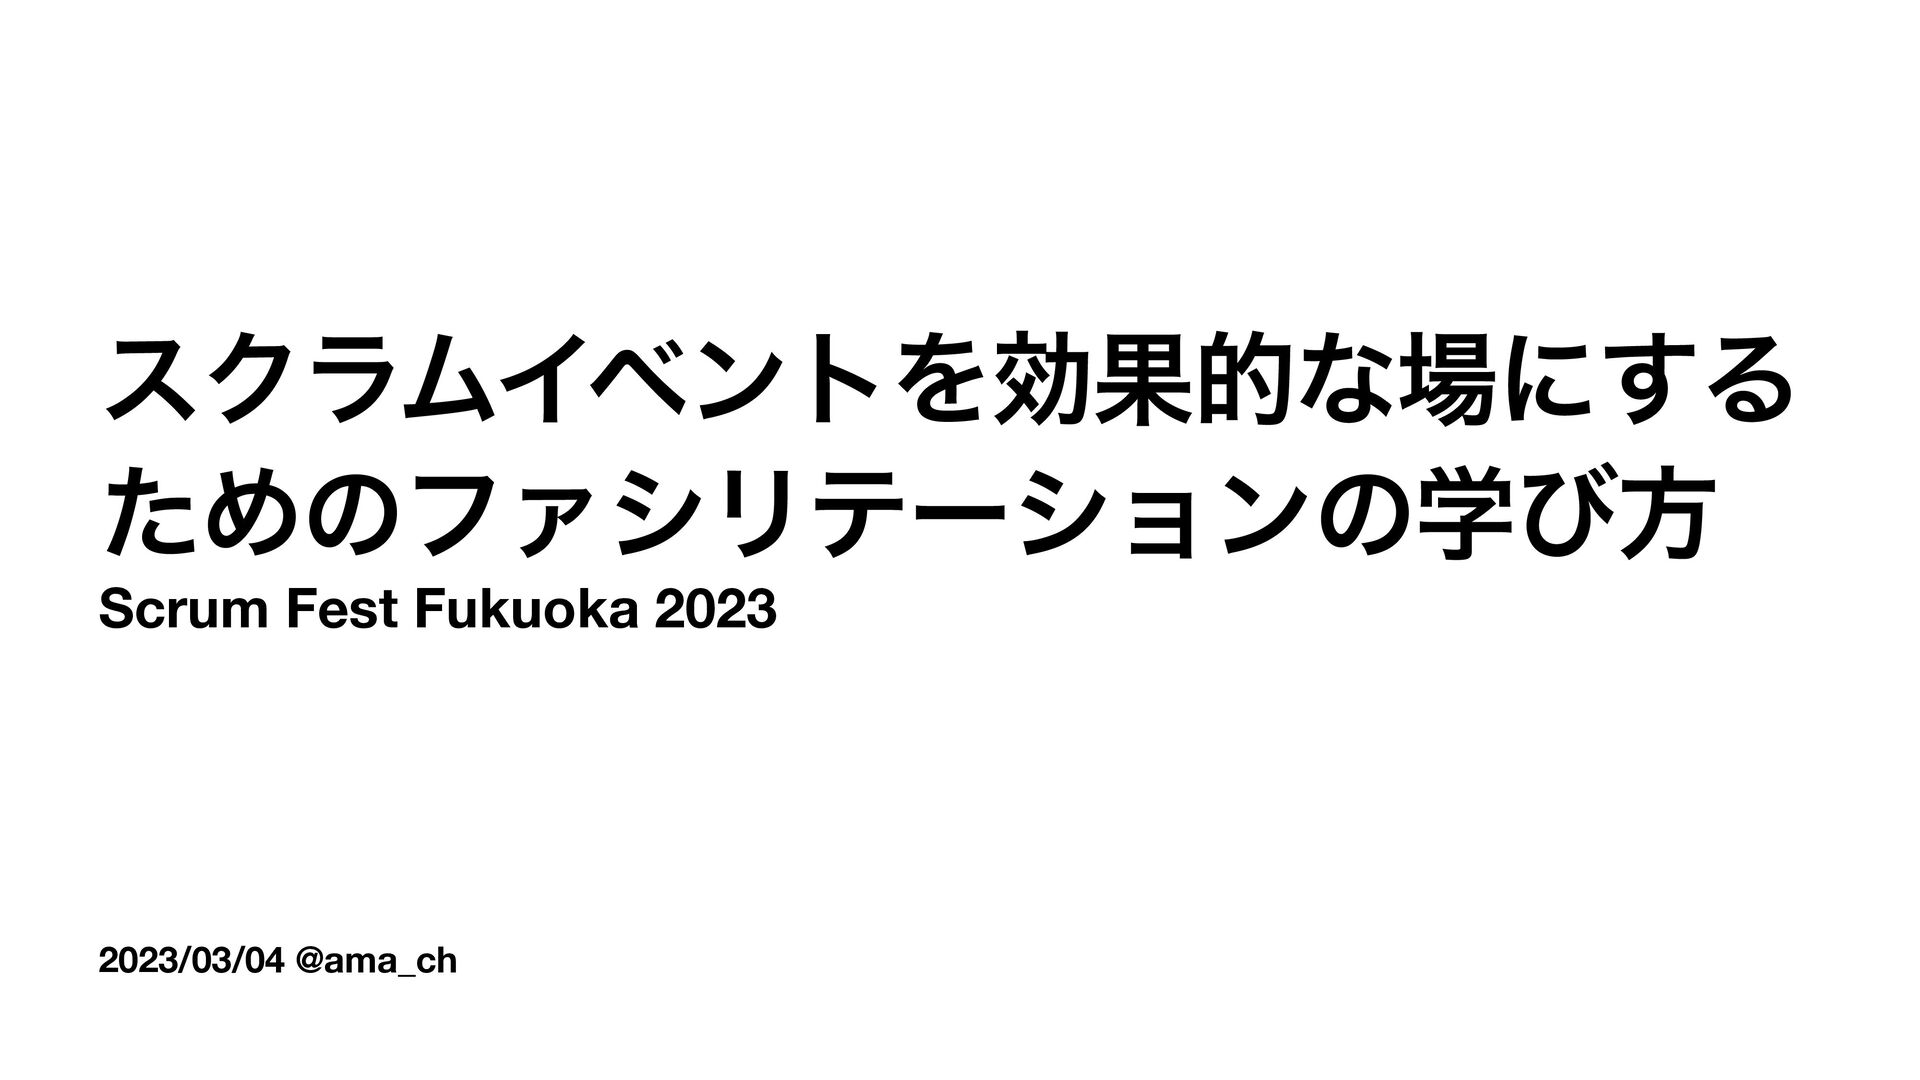 Slide Top: スクラムイベントを効果的な場にするためのファシリテーションの学び方 / Scrum Fest Fukuoka 2023